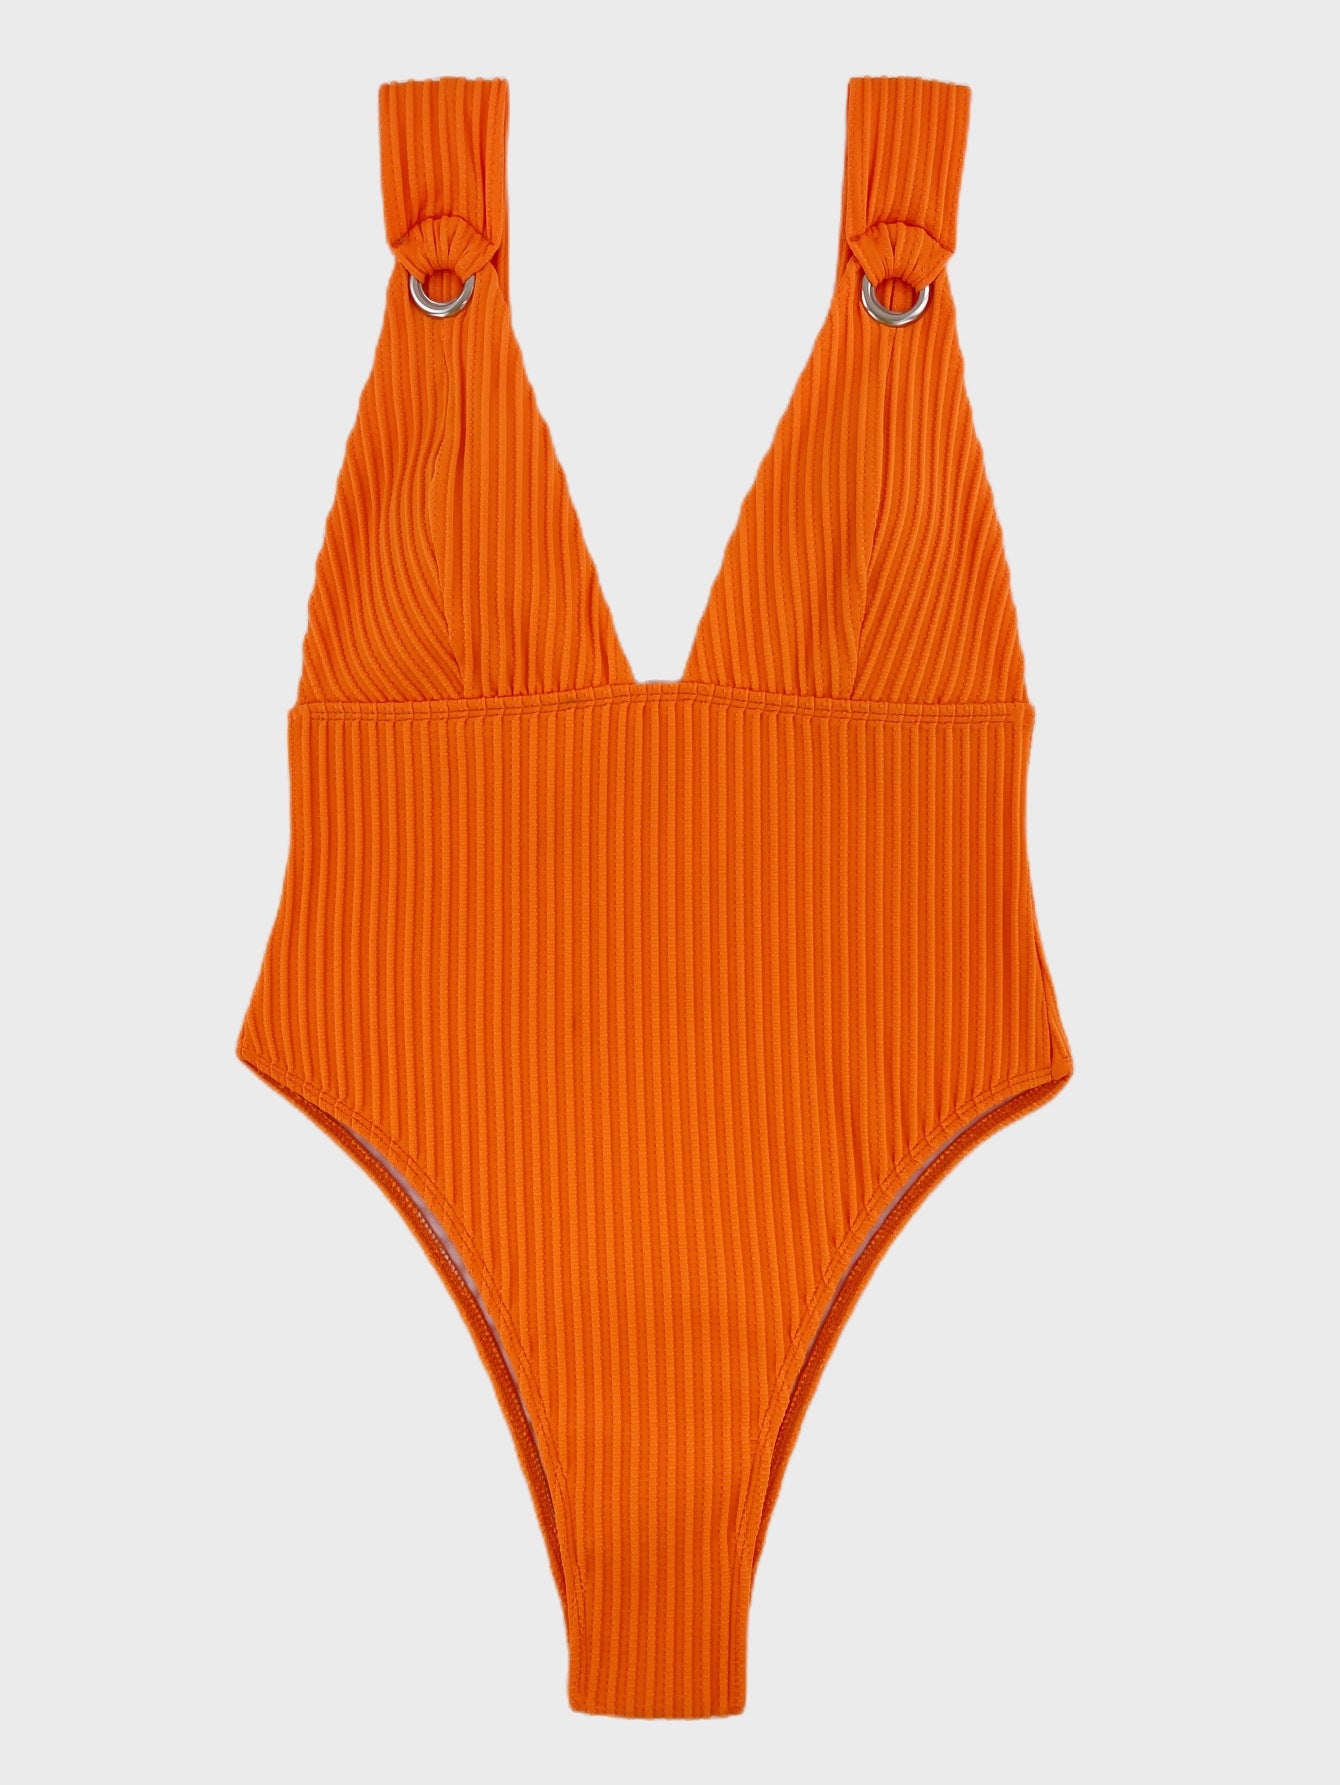 One Piece Swimsuit Women Sexy Solid Color Bikini Swimsuit